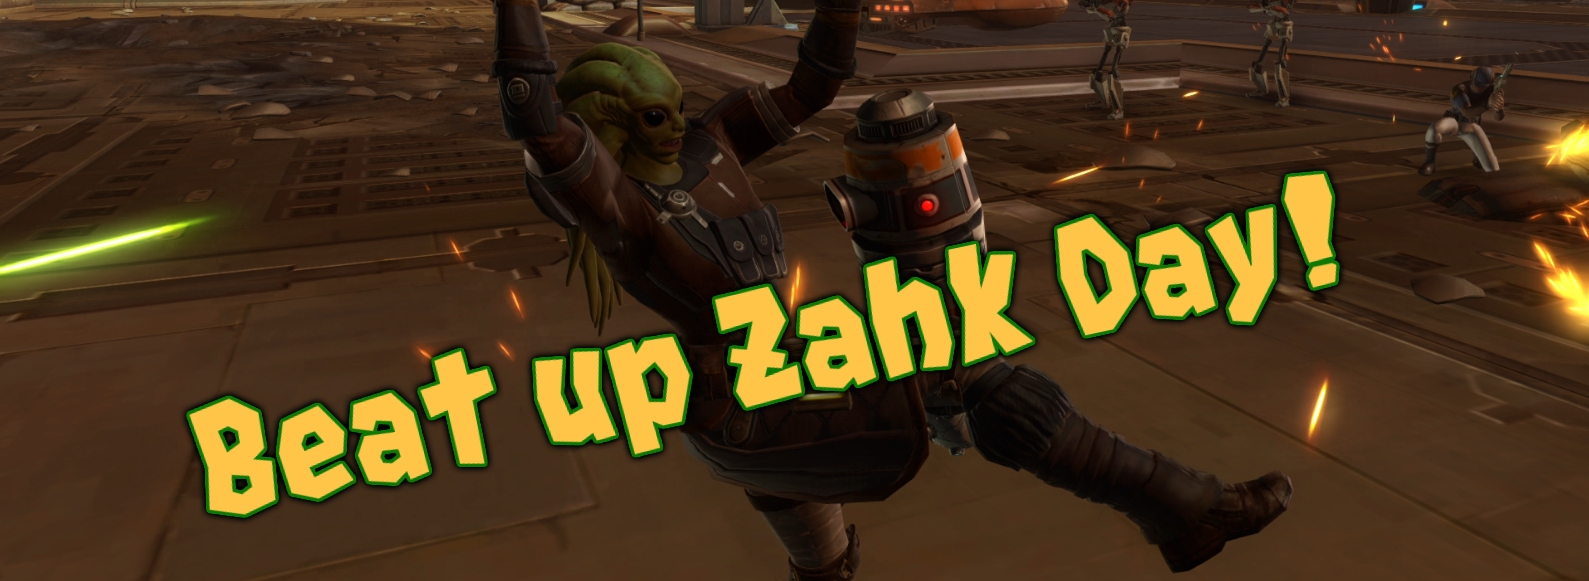 [Achievements] Beat Up Zahk Day - Hoth!!